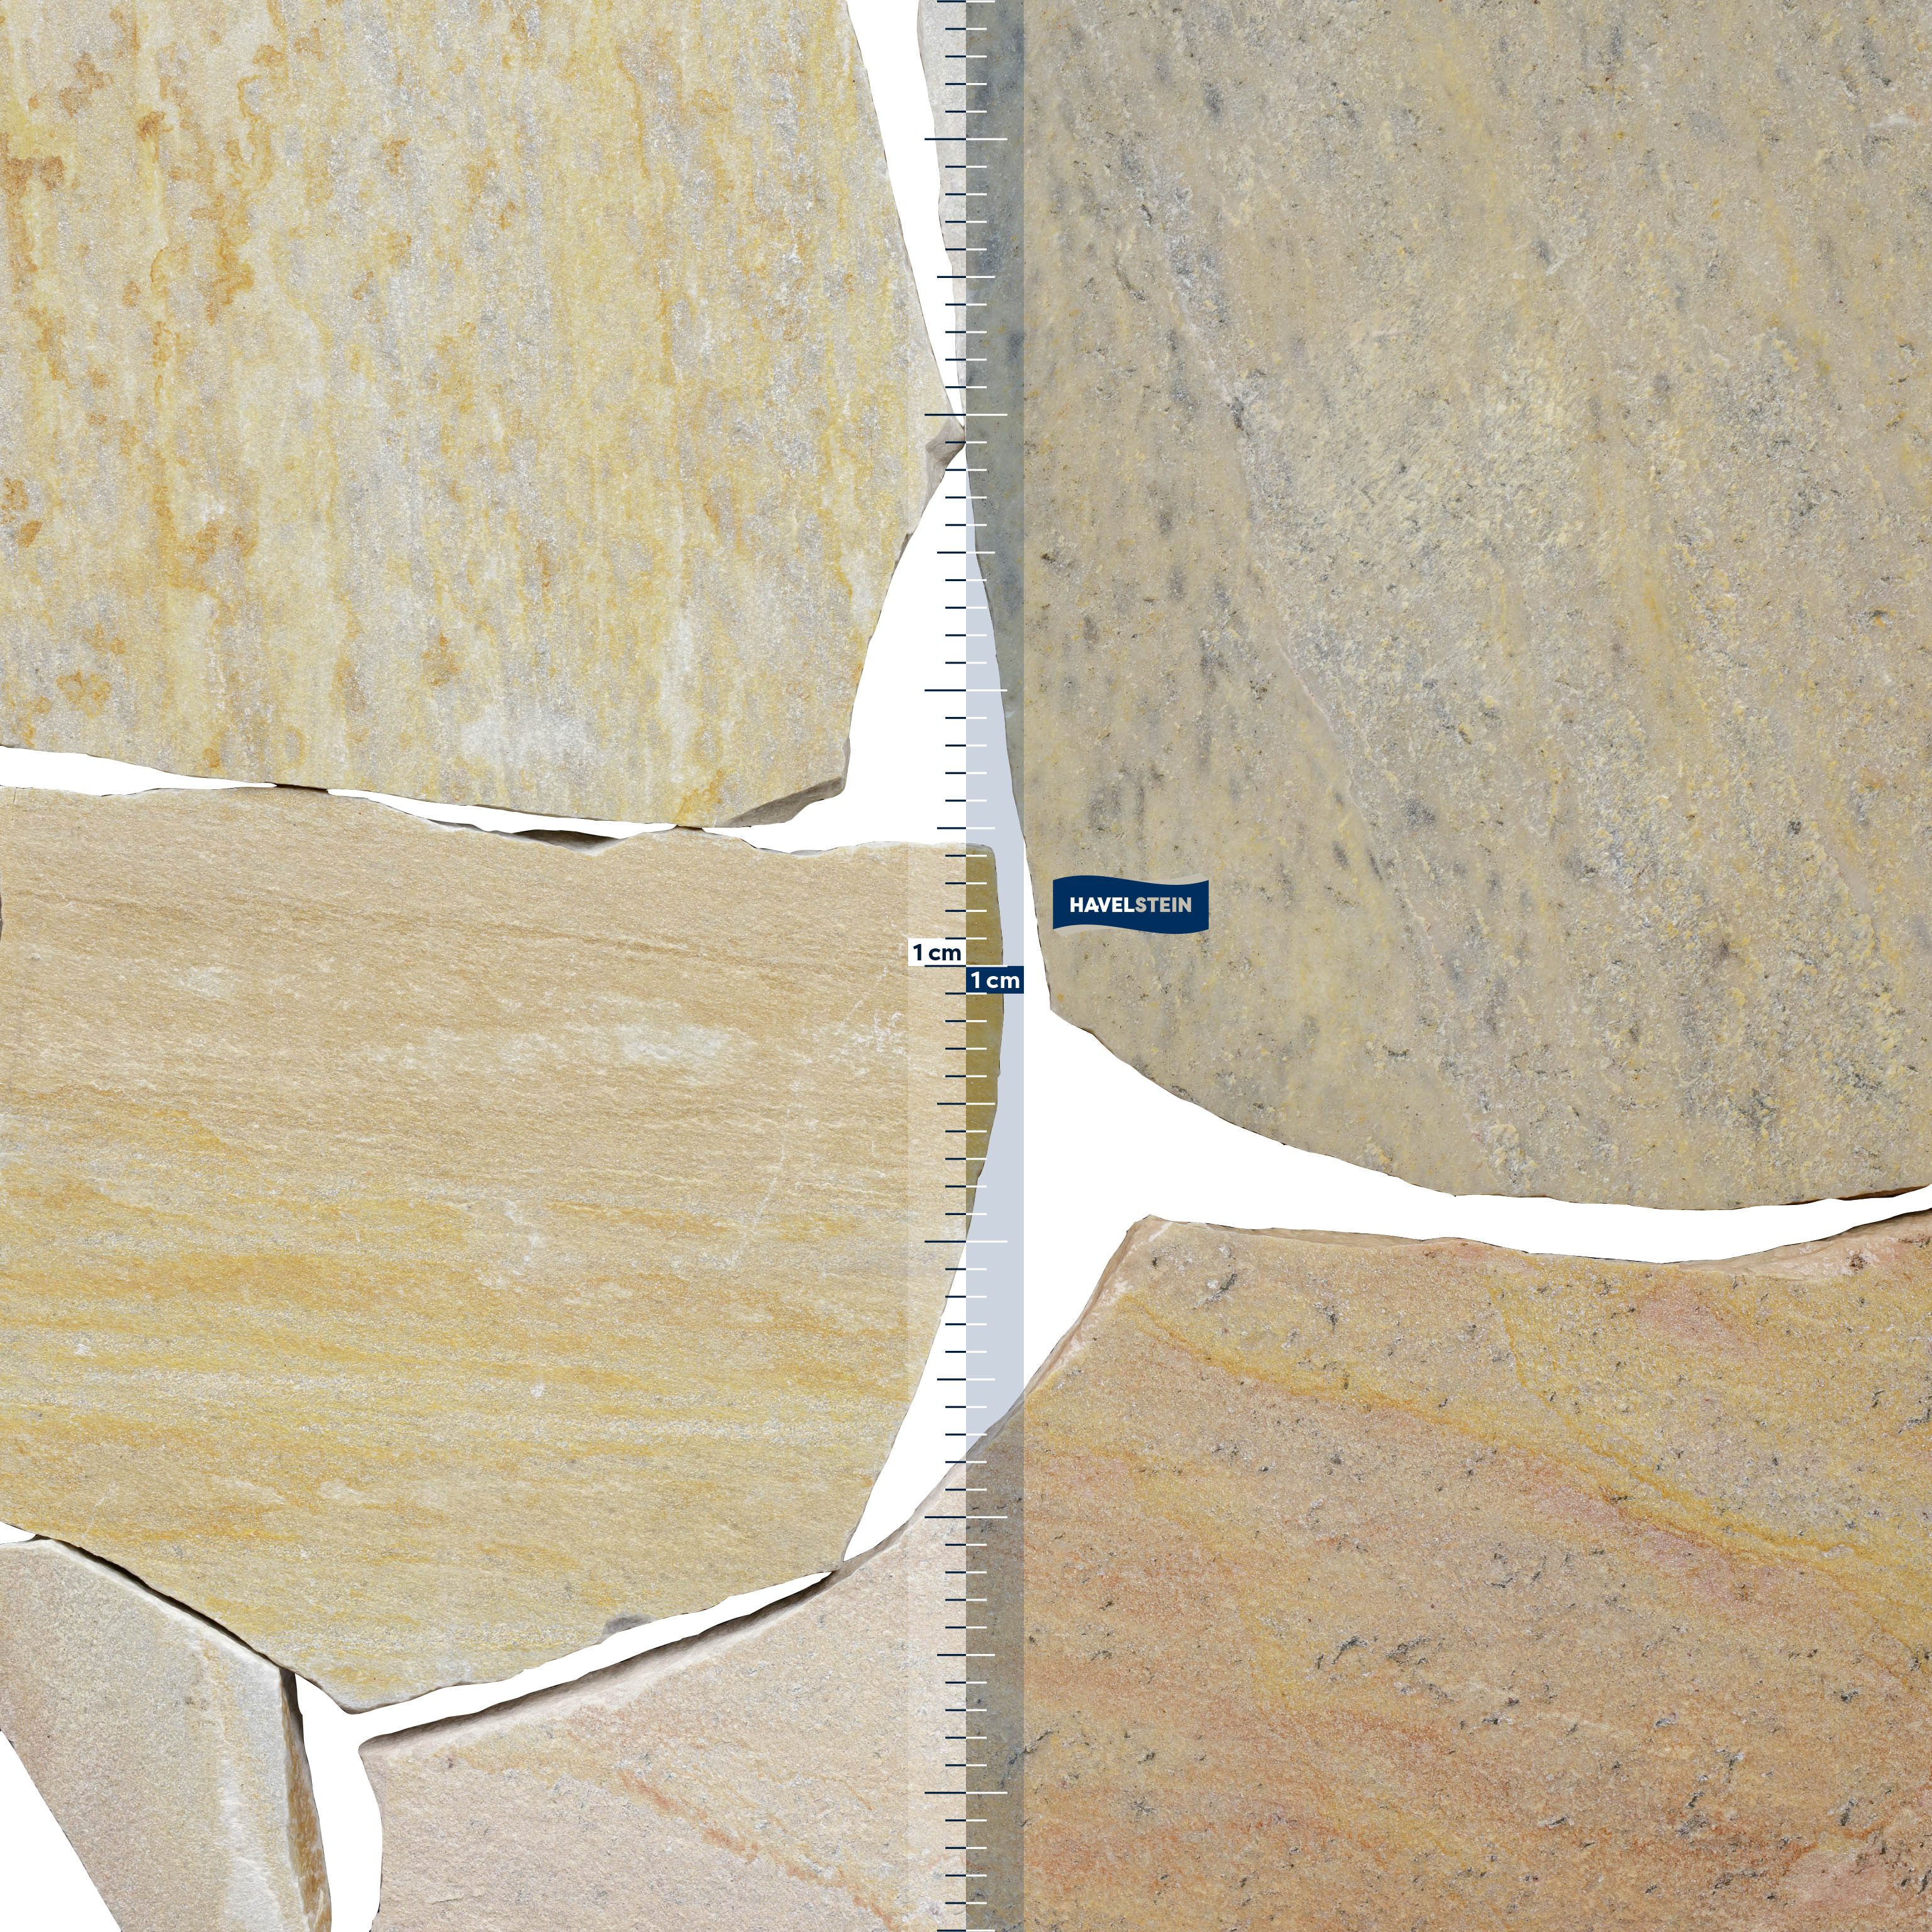 Terrassenplatten, Quarzit gelb/weiß (Sáodora) spaltrau, Quarzit Polygonalplatte, gelb/weiß, 2,5–4,5 cm stark, OF spaltrau